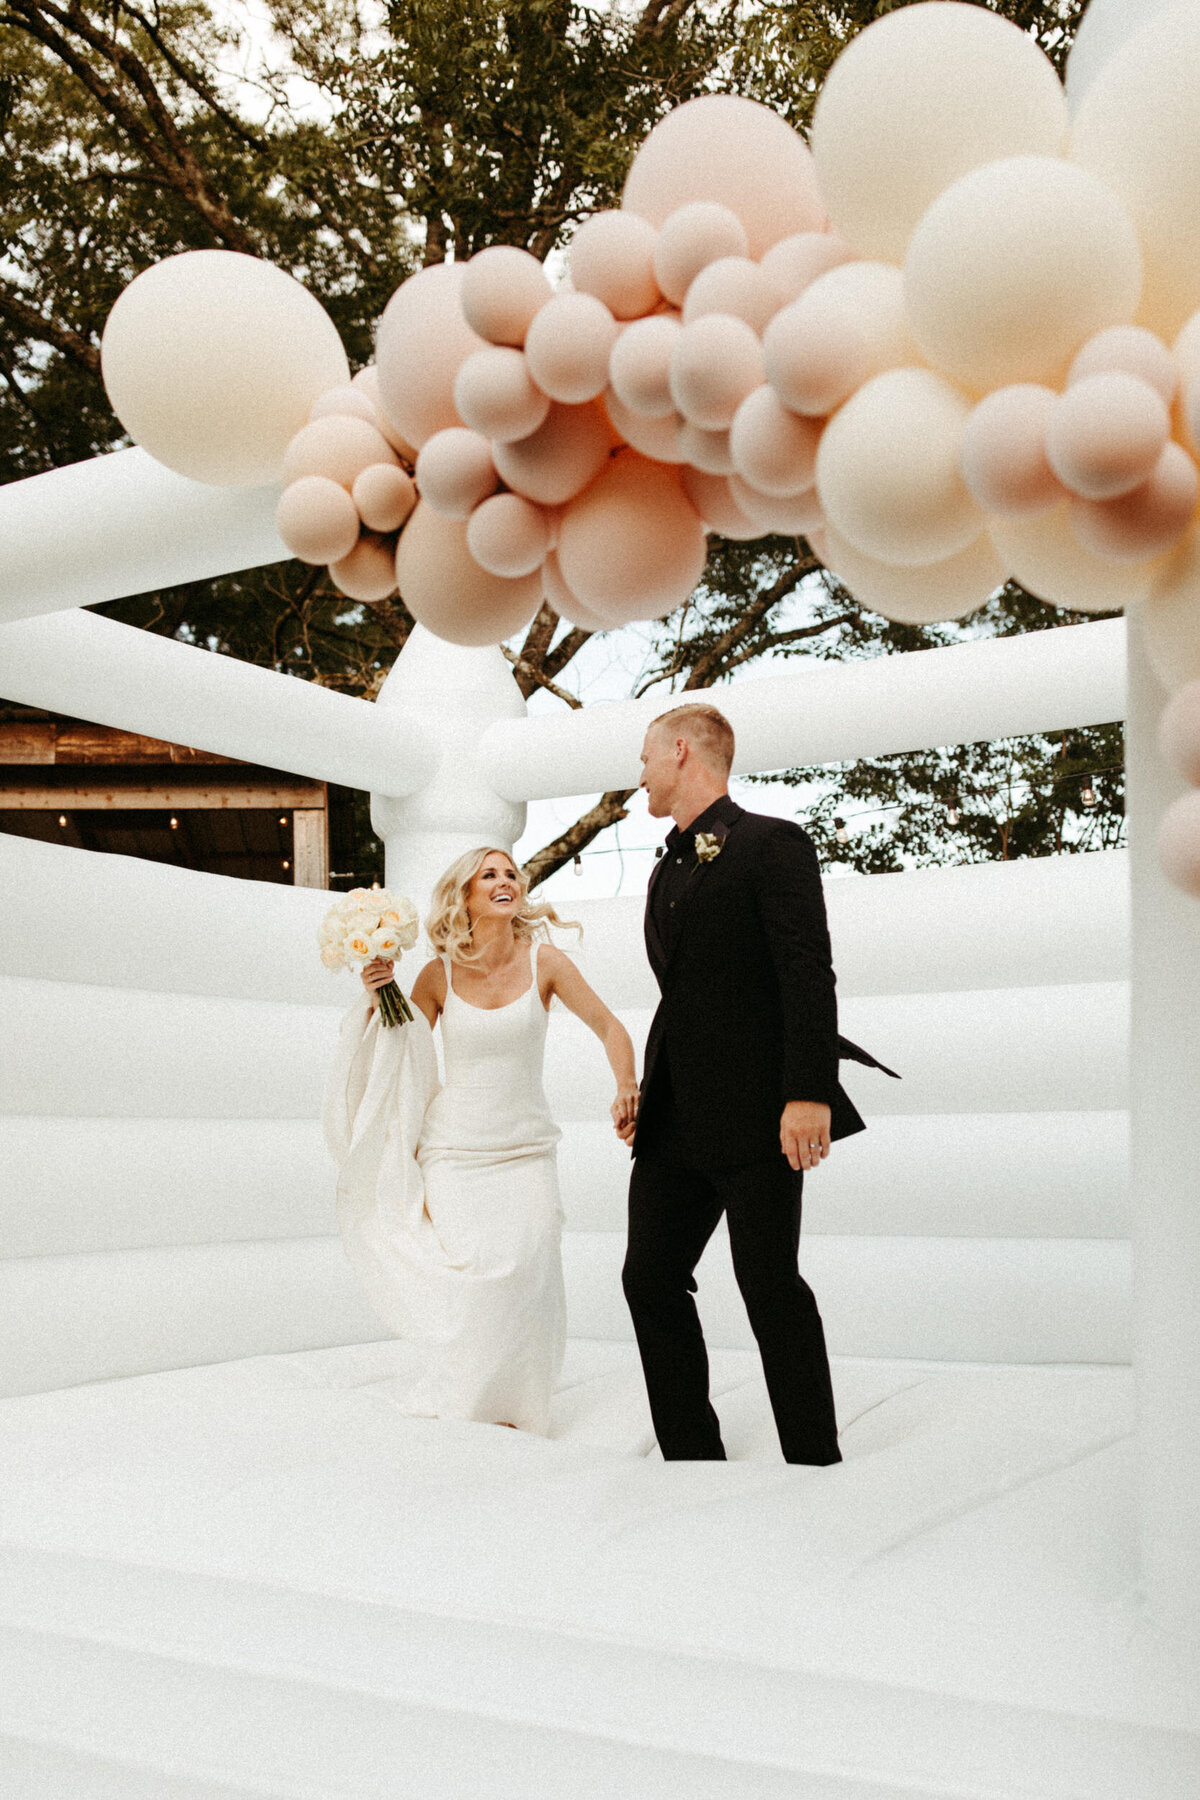 tupelo-mississippi-verona-ms-kingfisher-lodge-wedding-venue-reception-bounce-house-balloons